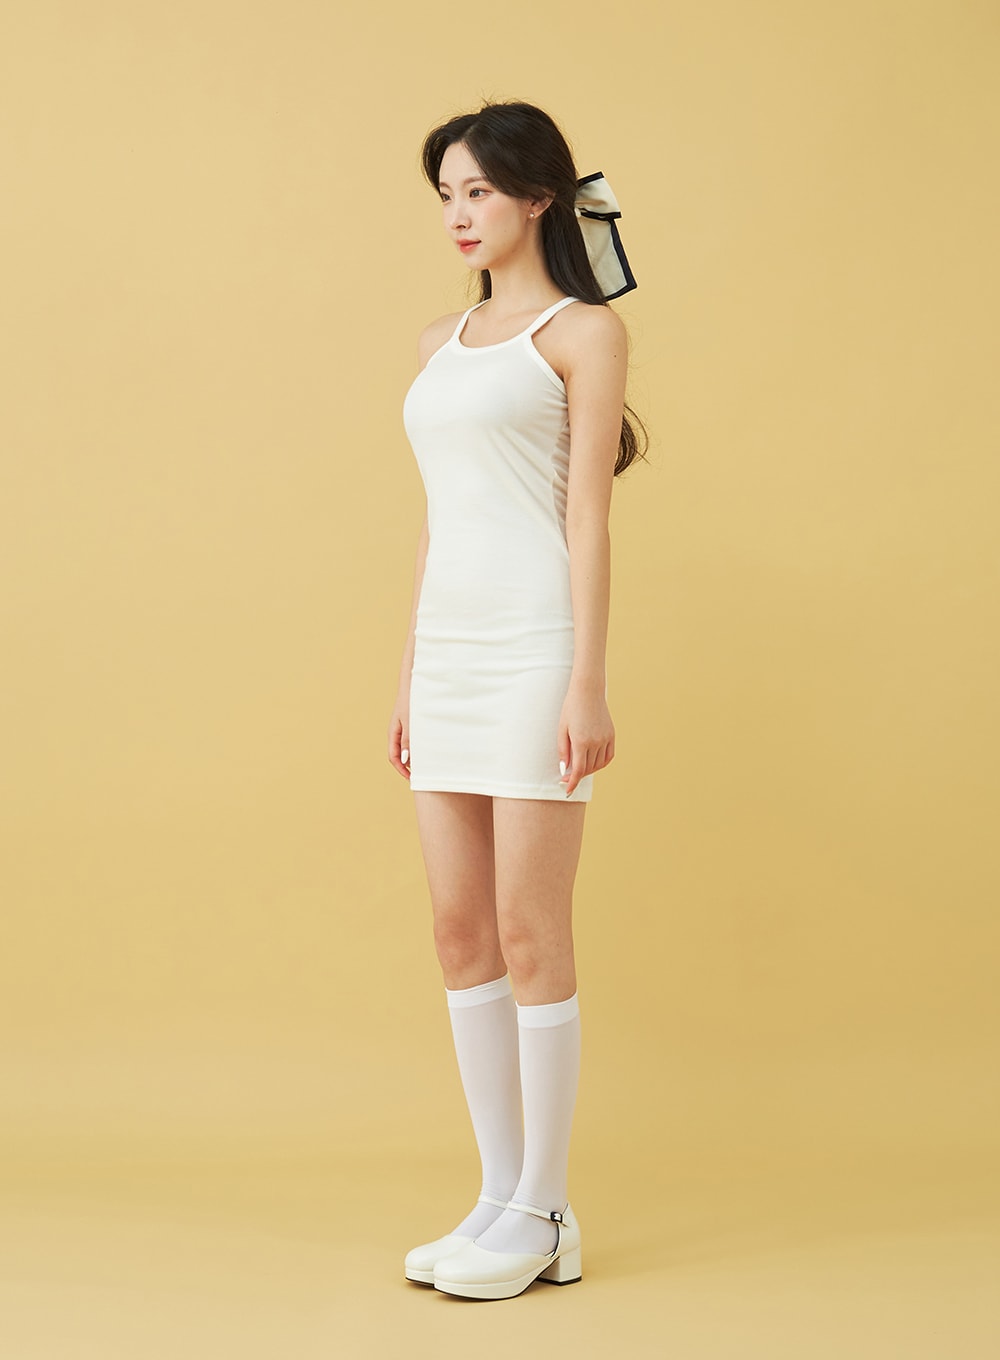 Clover Chained Cardigan and Mini Dress Set BU13